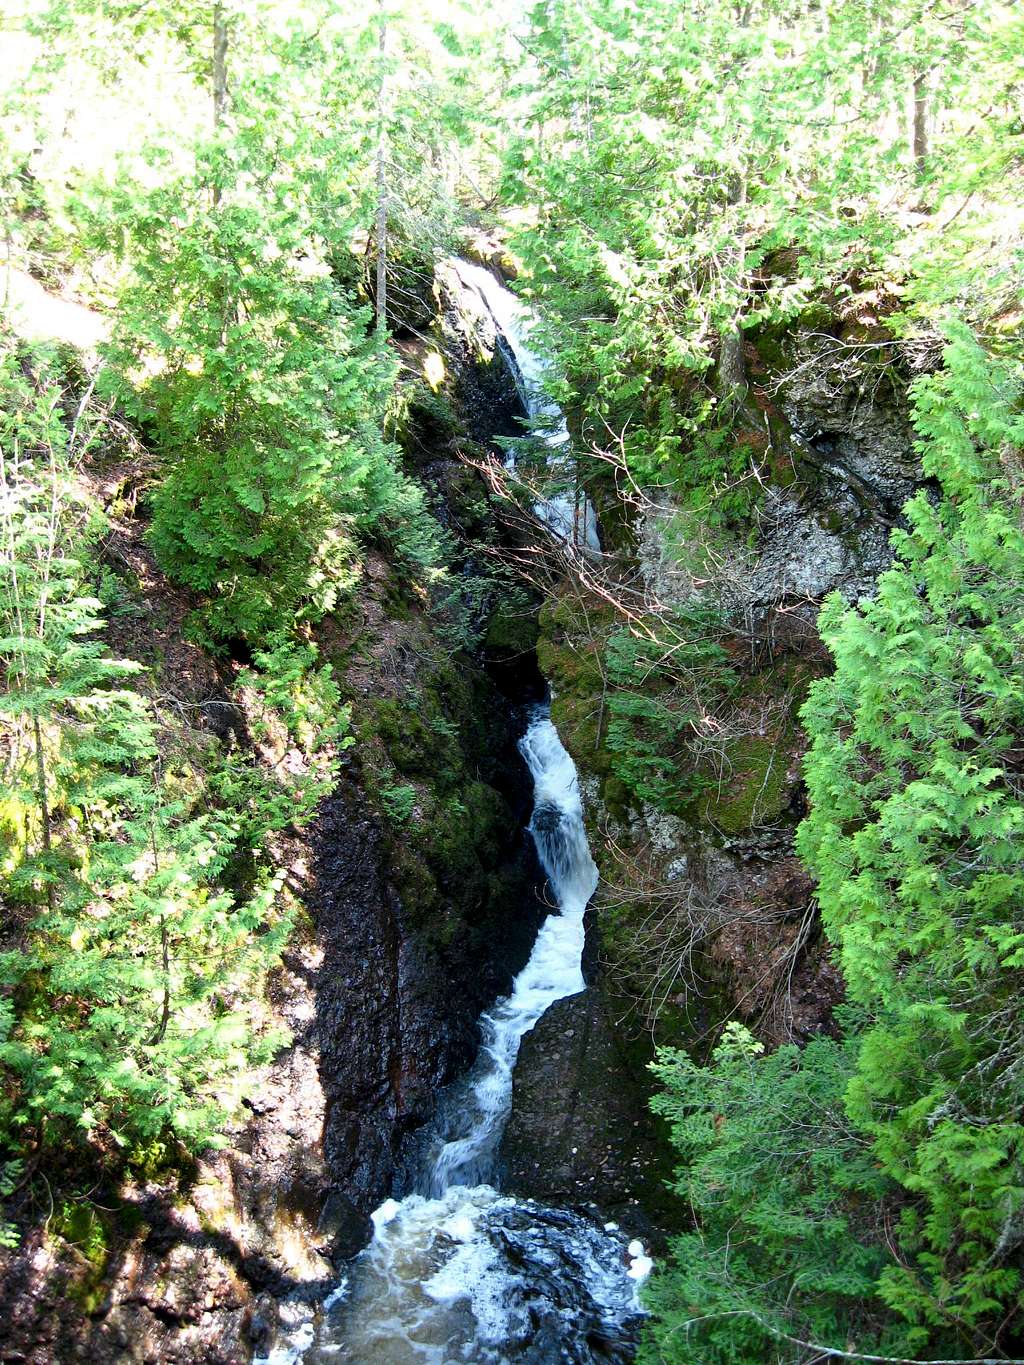 Manganese Falls